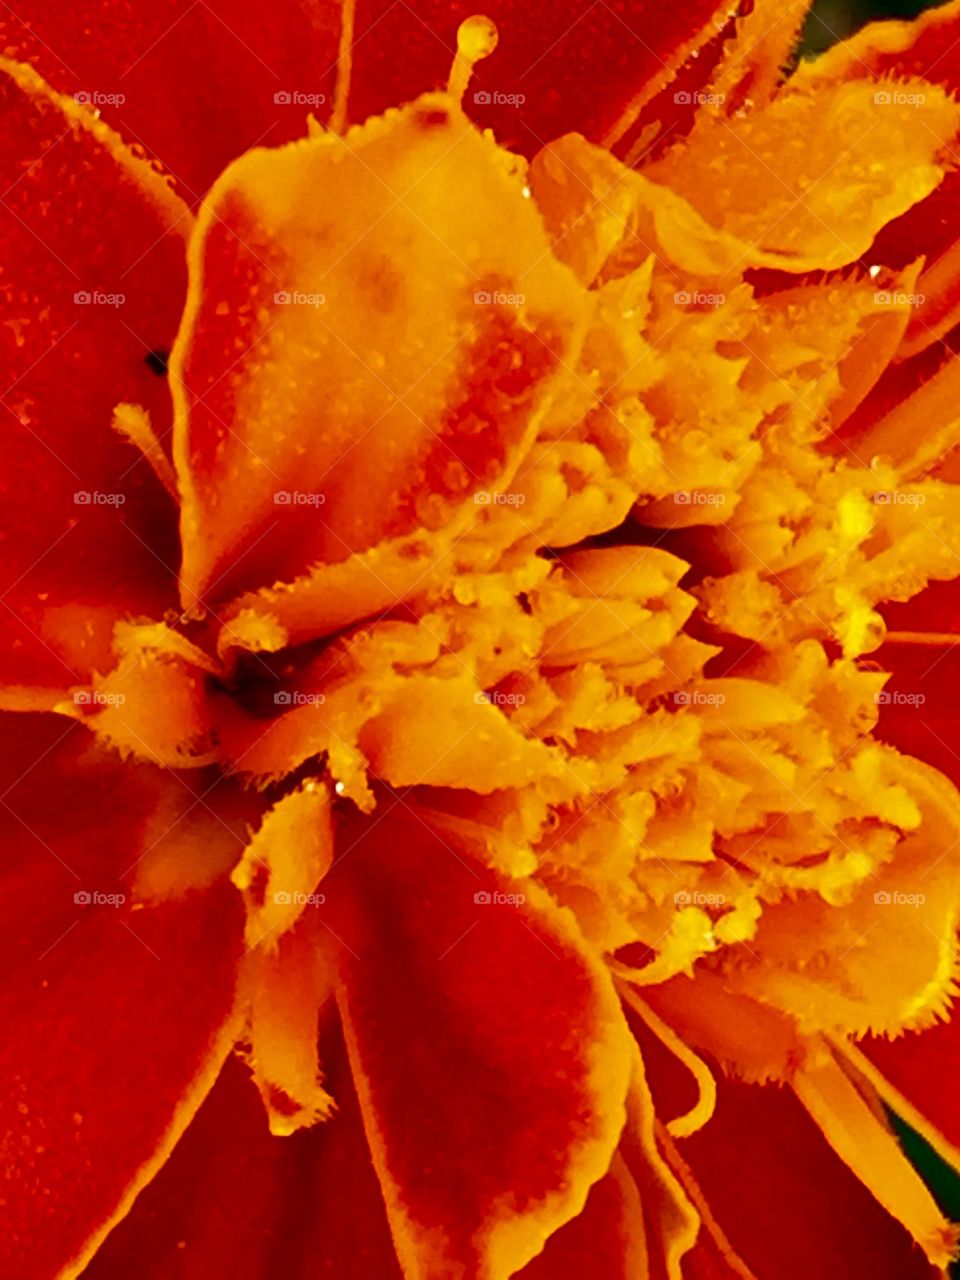 Marigold in bloom